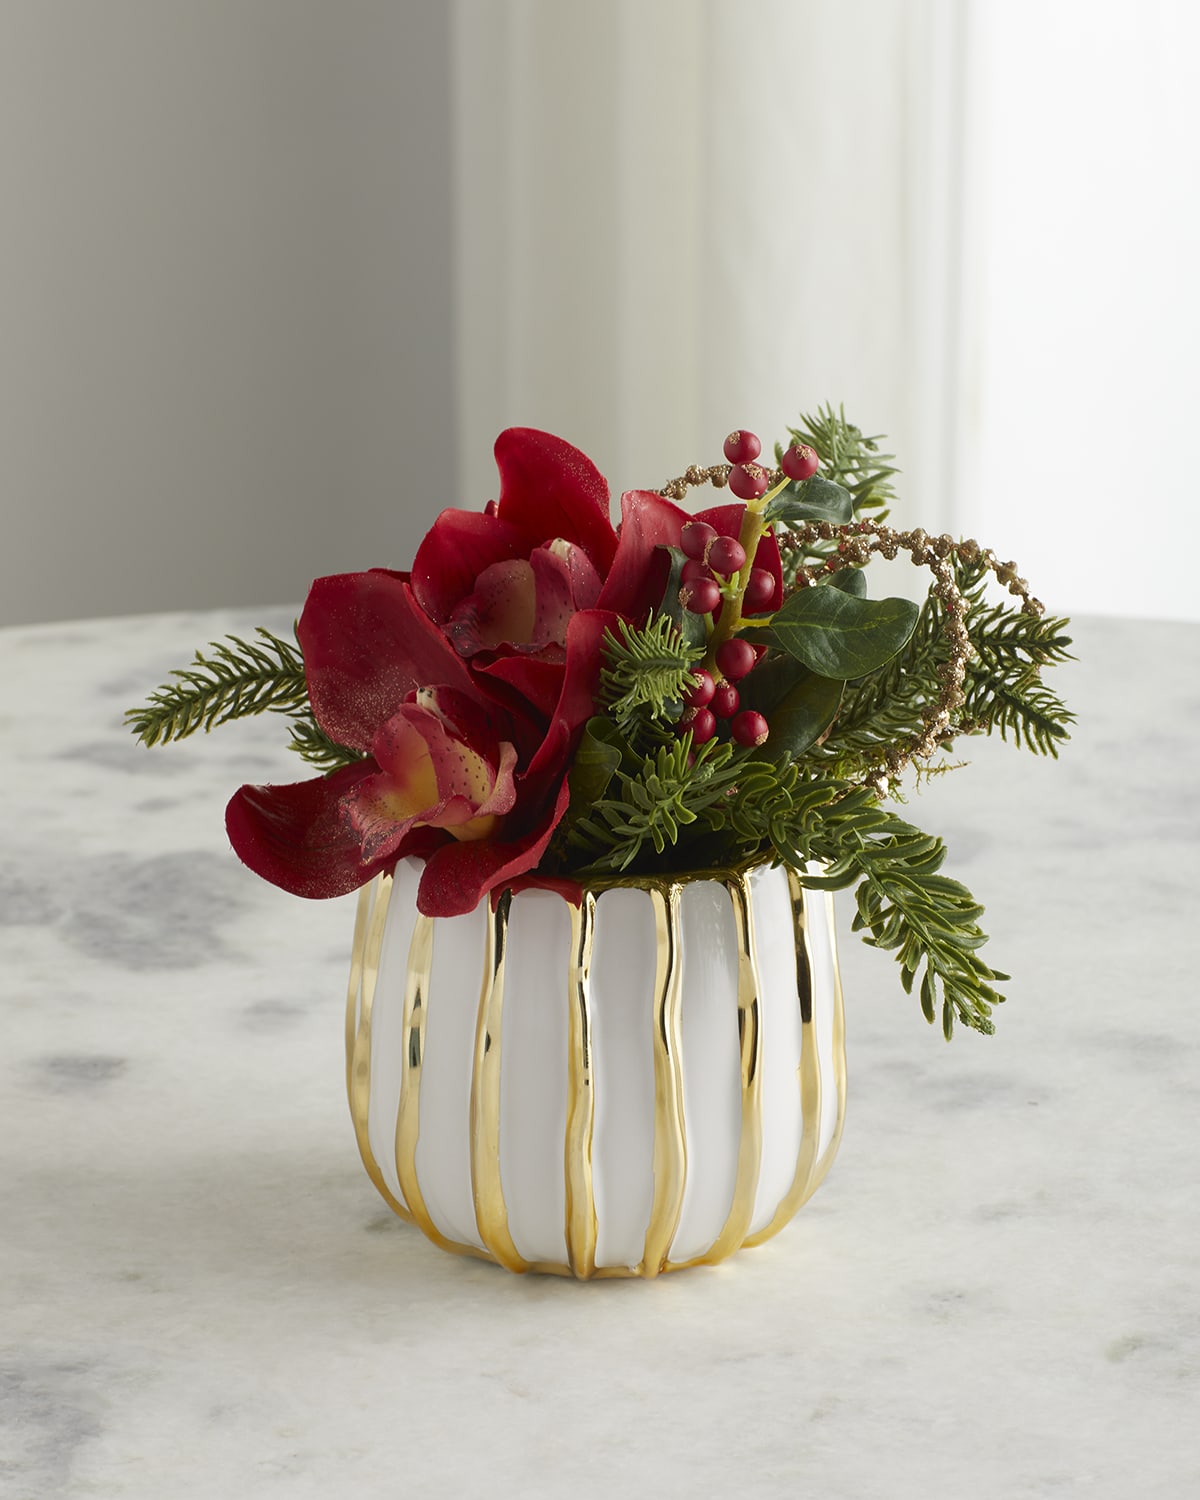 Joyous Christmas Floral Arrangement – Flower Arrangement – USA delivery -  Heart & Thorn USA